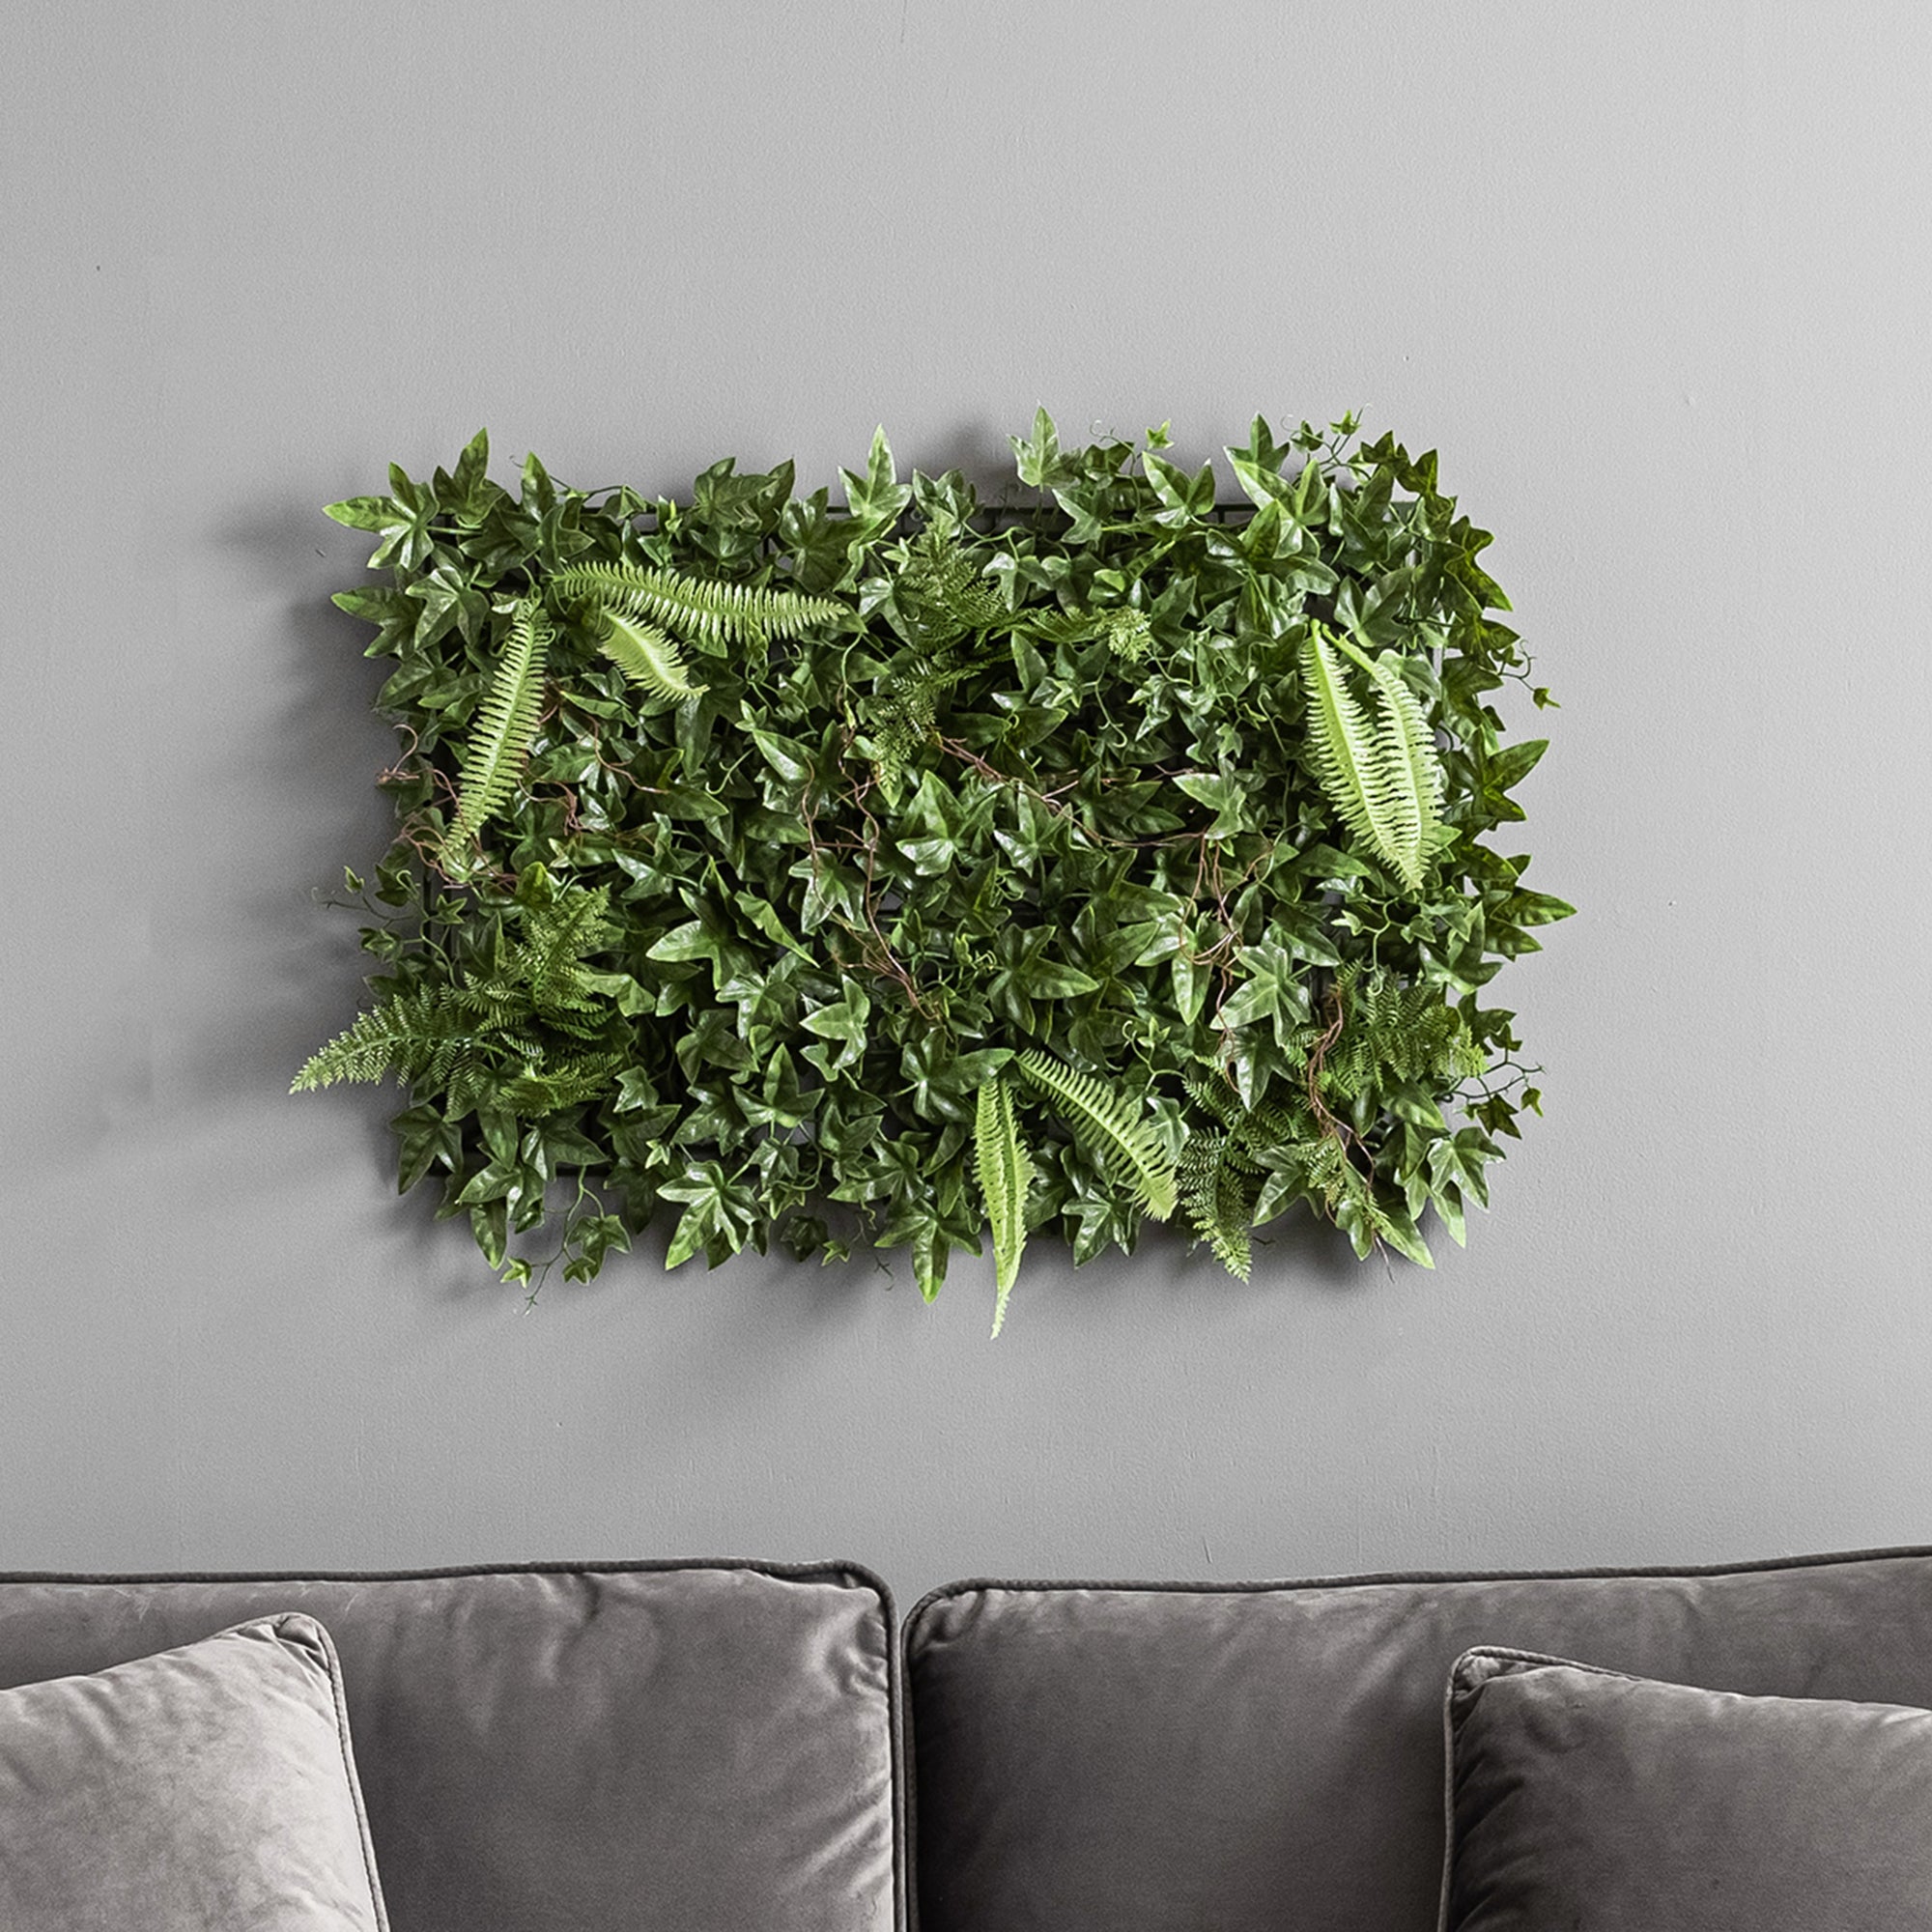 Artificial Green Ivy Fern Panel